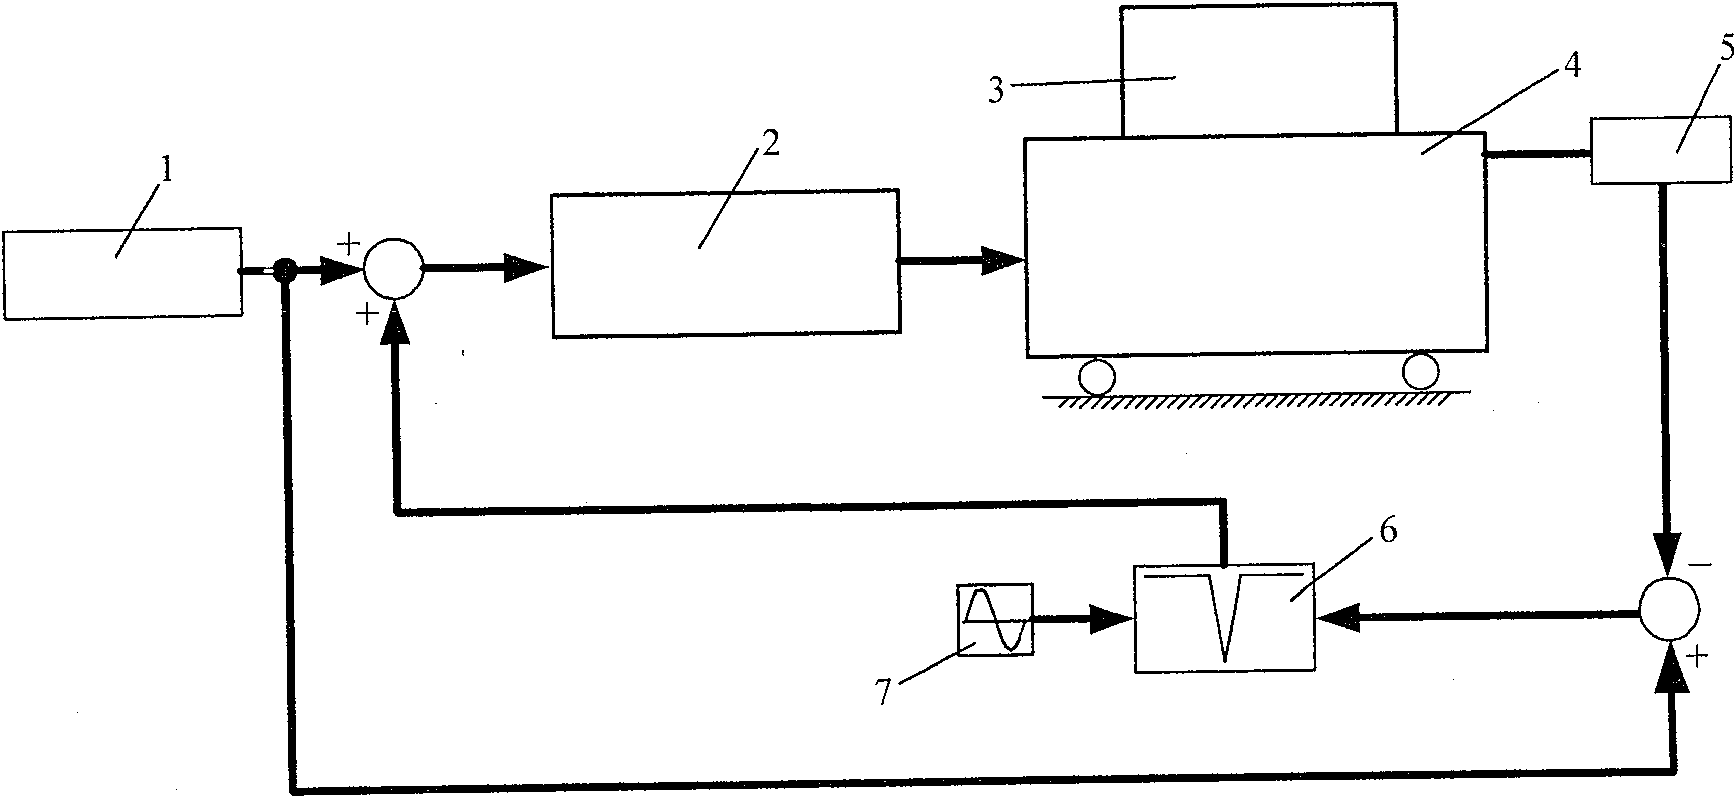 Electro-hydraulic servo vibration table resonance suppressing method